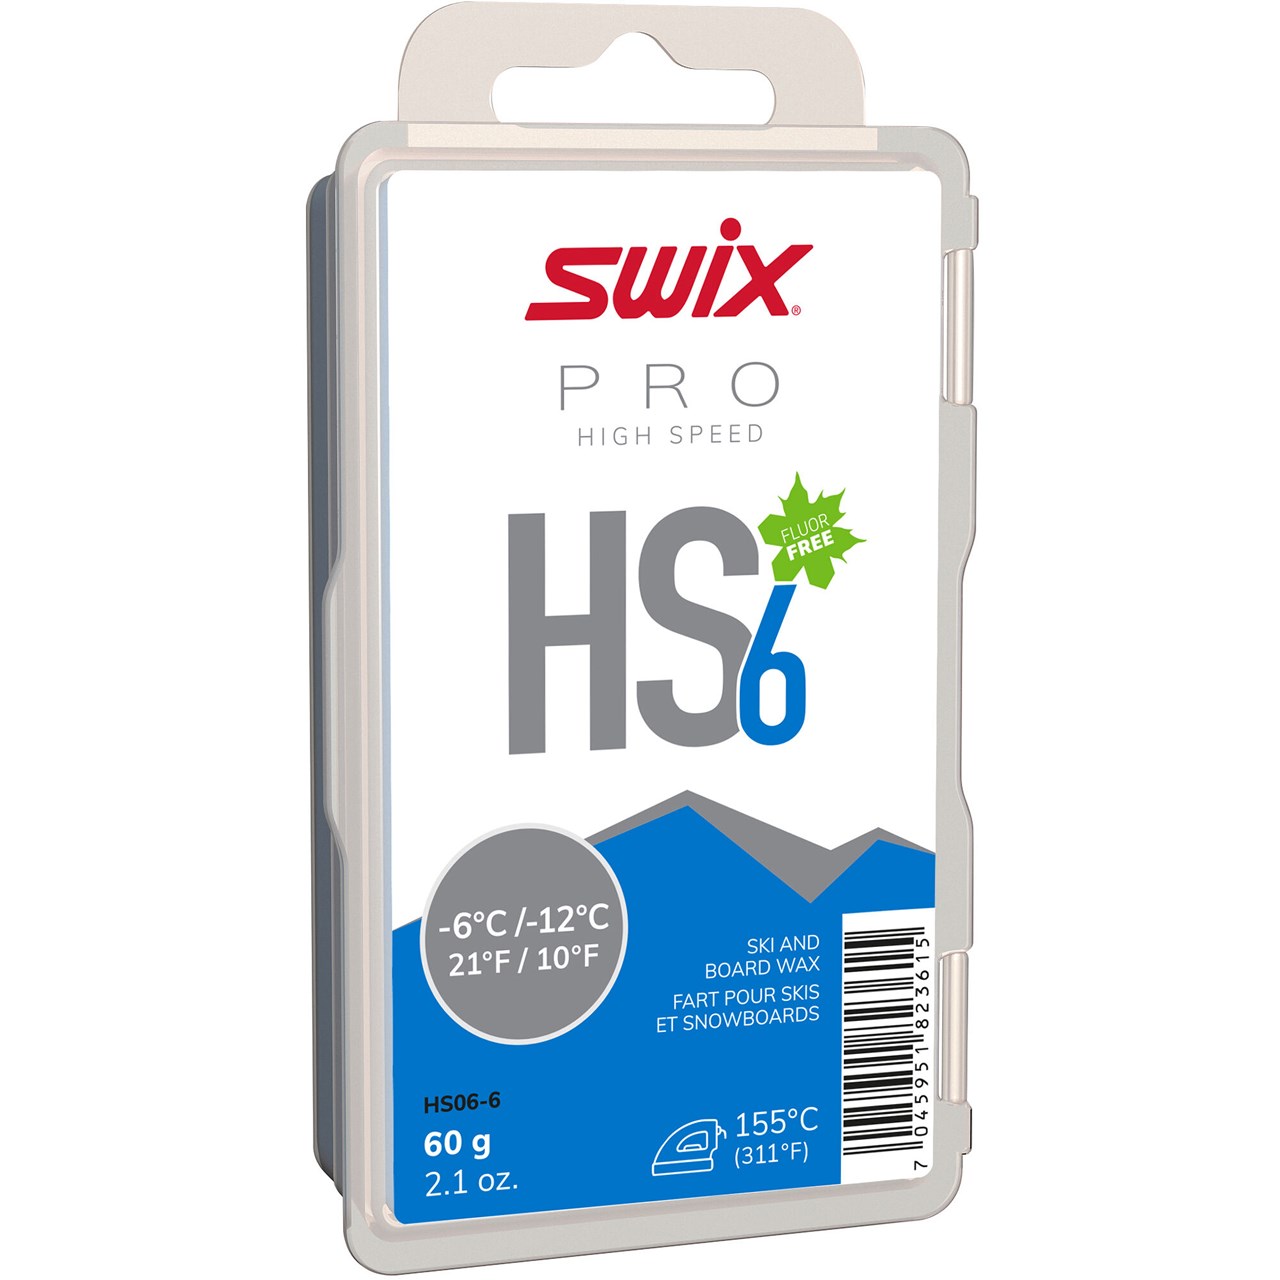 Swix HS6 Blue -6 to -12